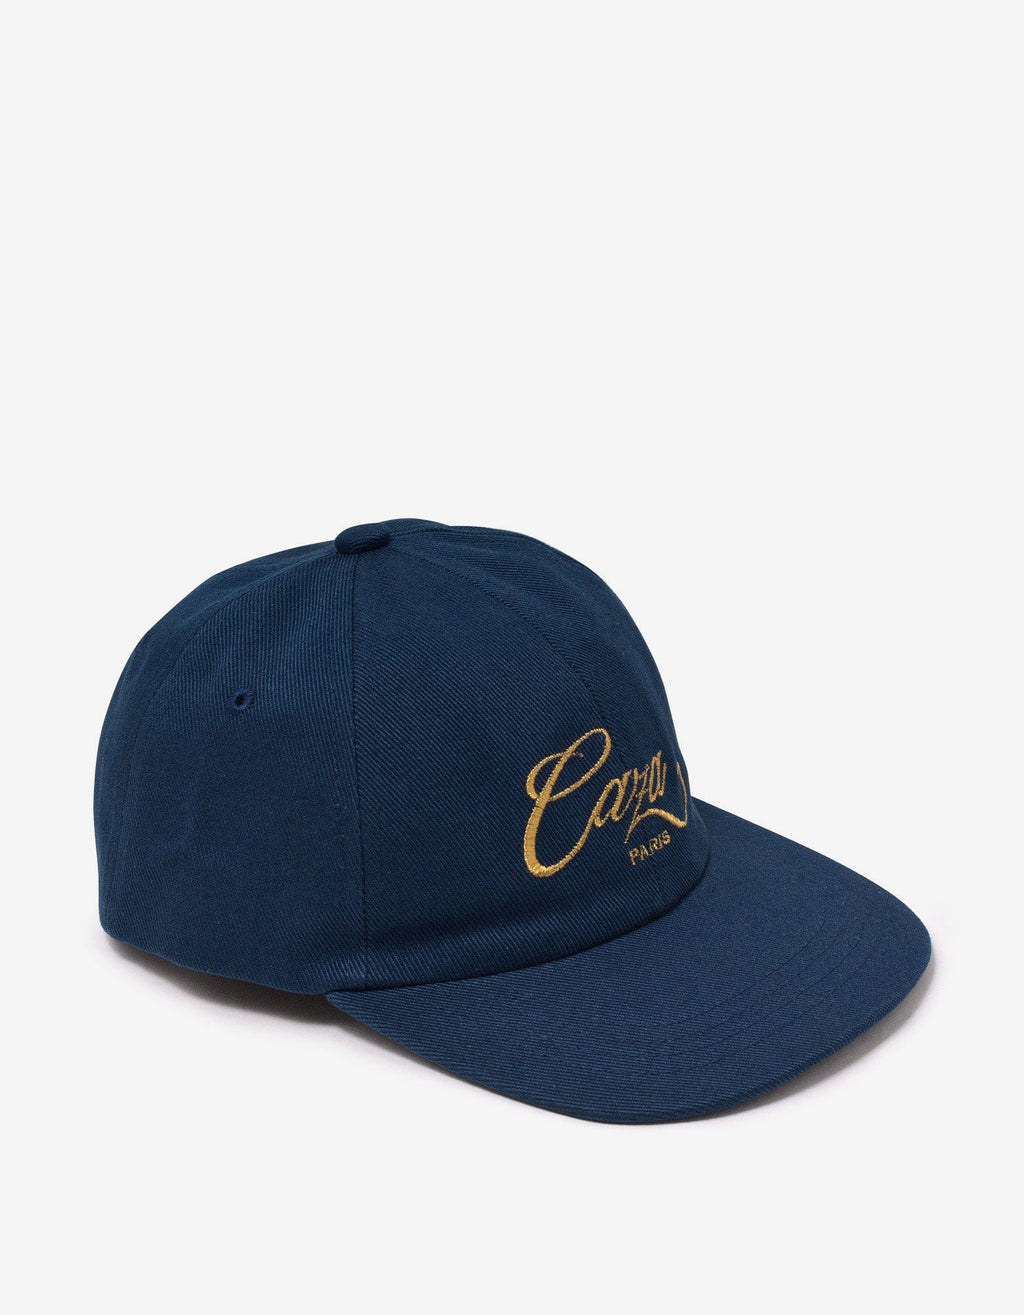 Casablanca Casablanca Navy Blue Caza Embroidery Cap